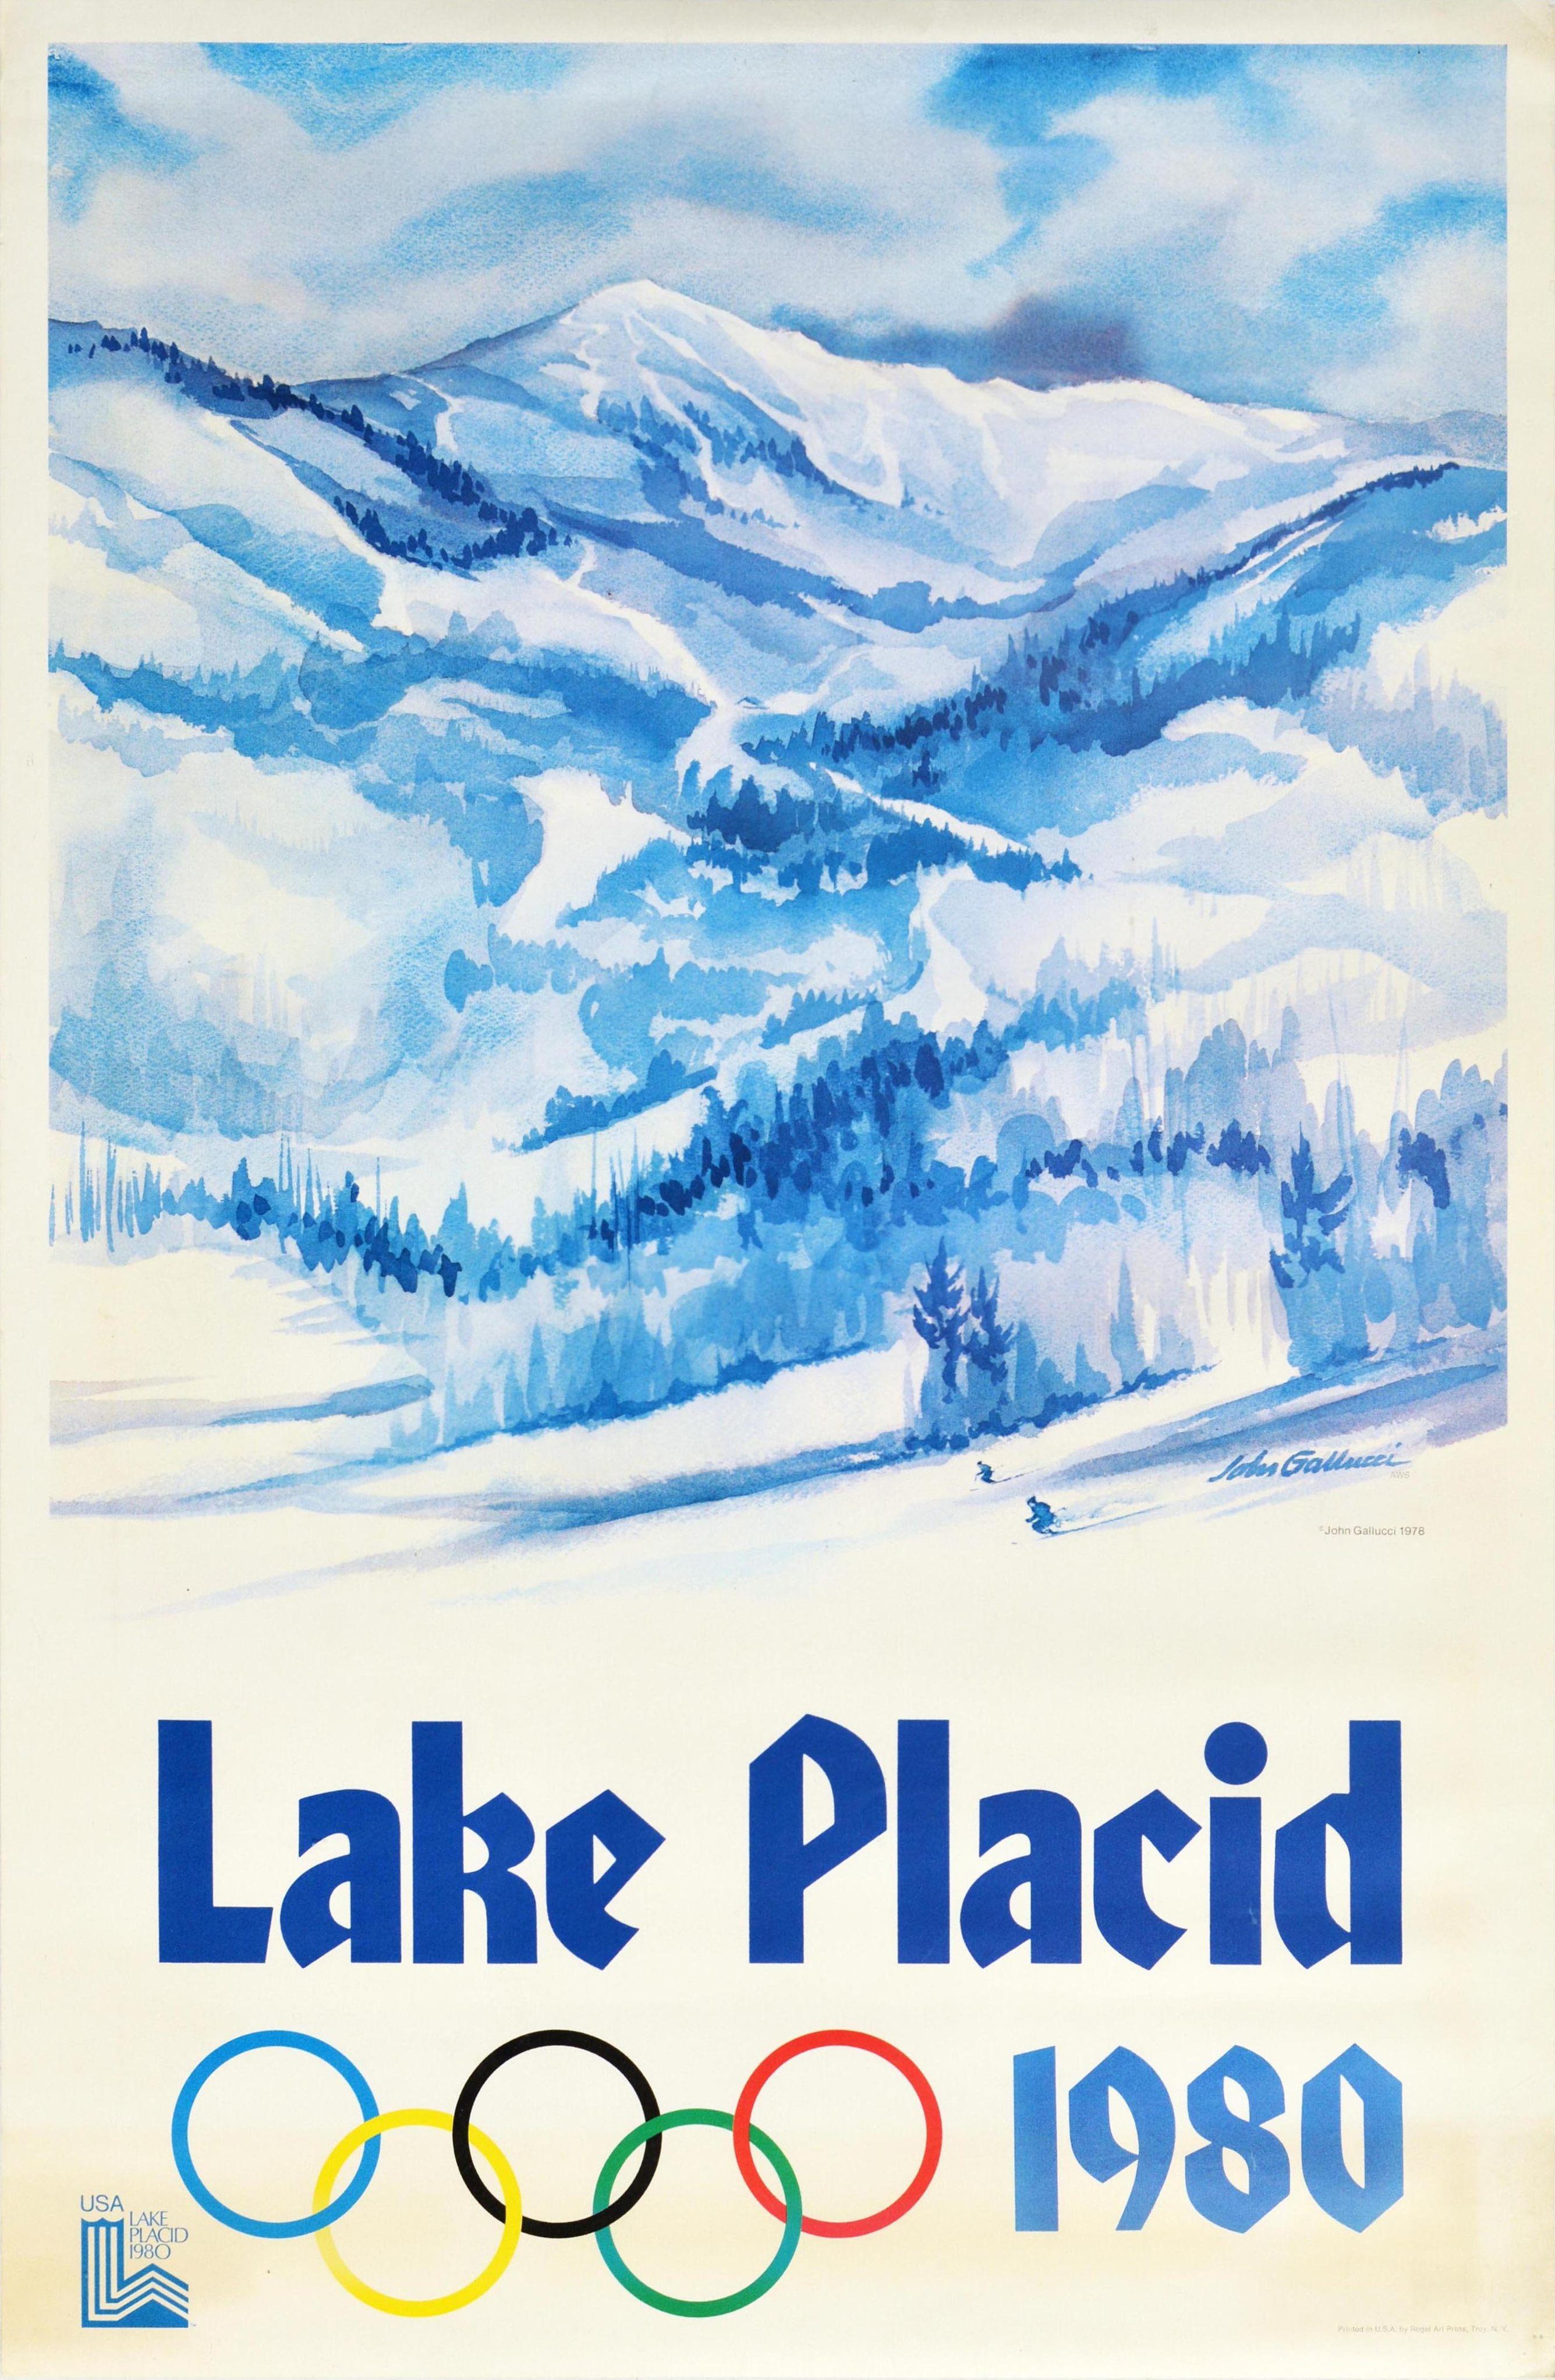 John Gallucci Print - Original Vintage Sport Poster Lake Placid 1980 Winter Olympics Skiers Mountains